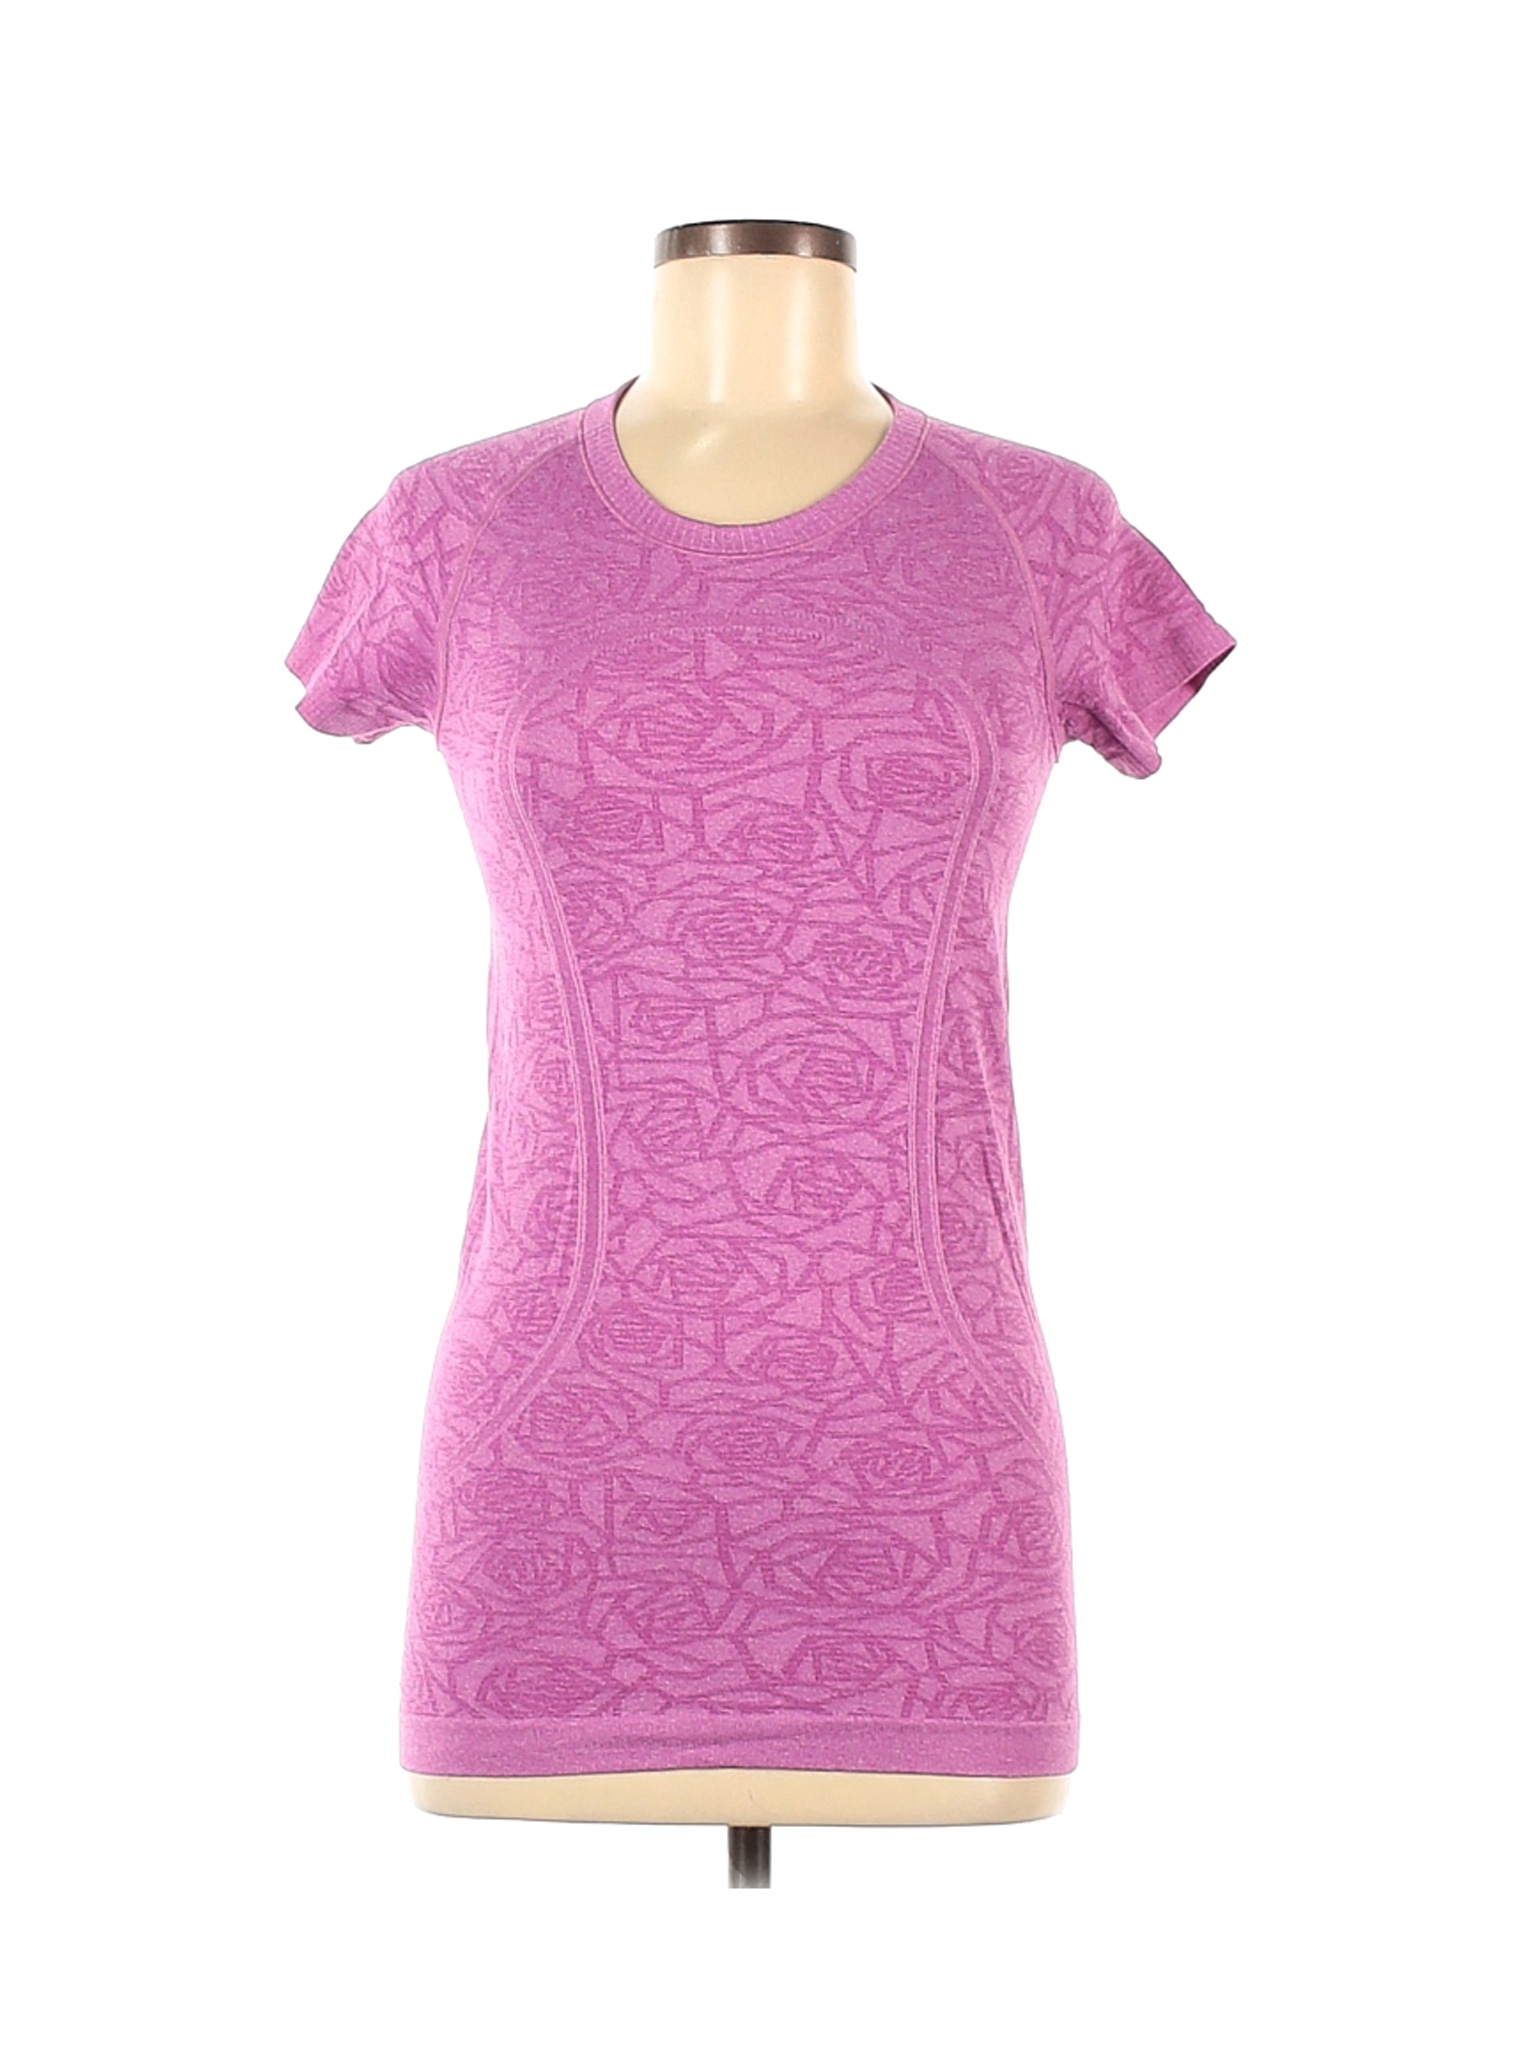 Lululemon Athletica Women Purple Active T-Shirt 8 | eBay